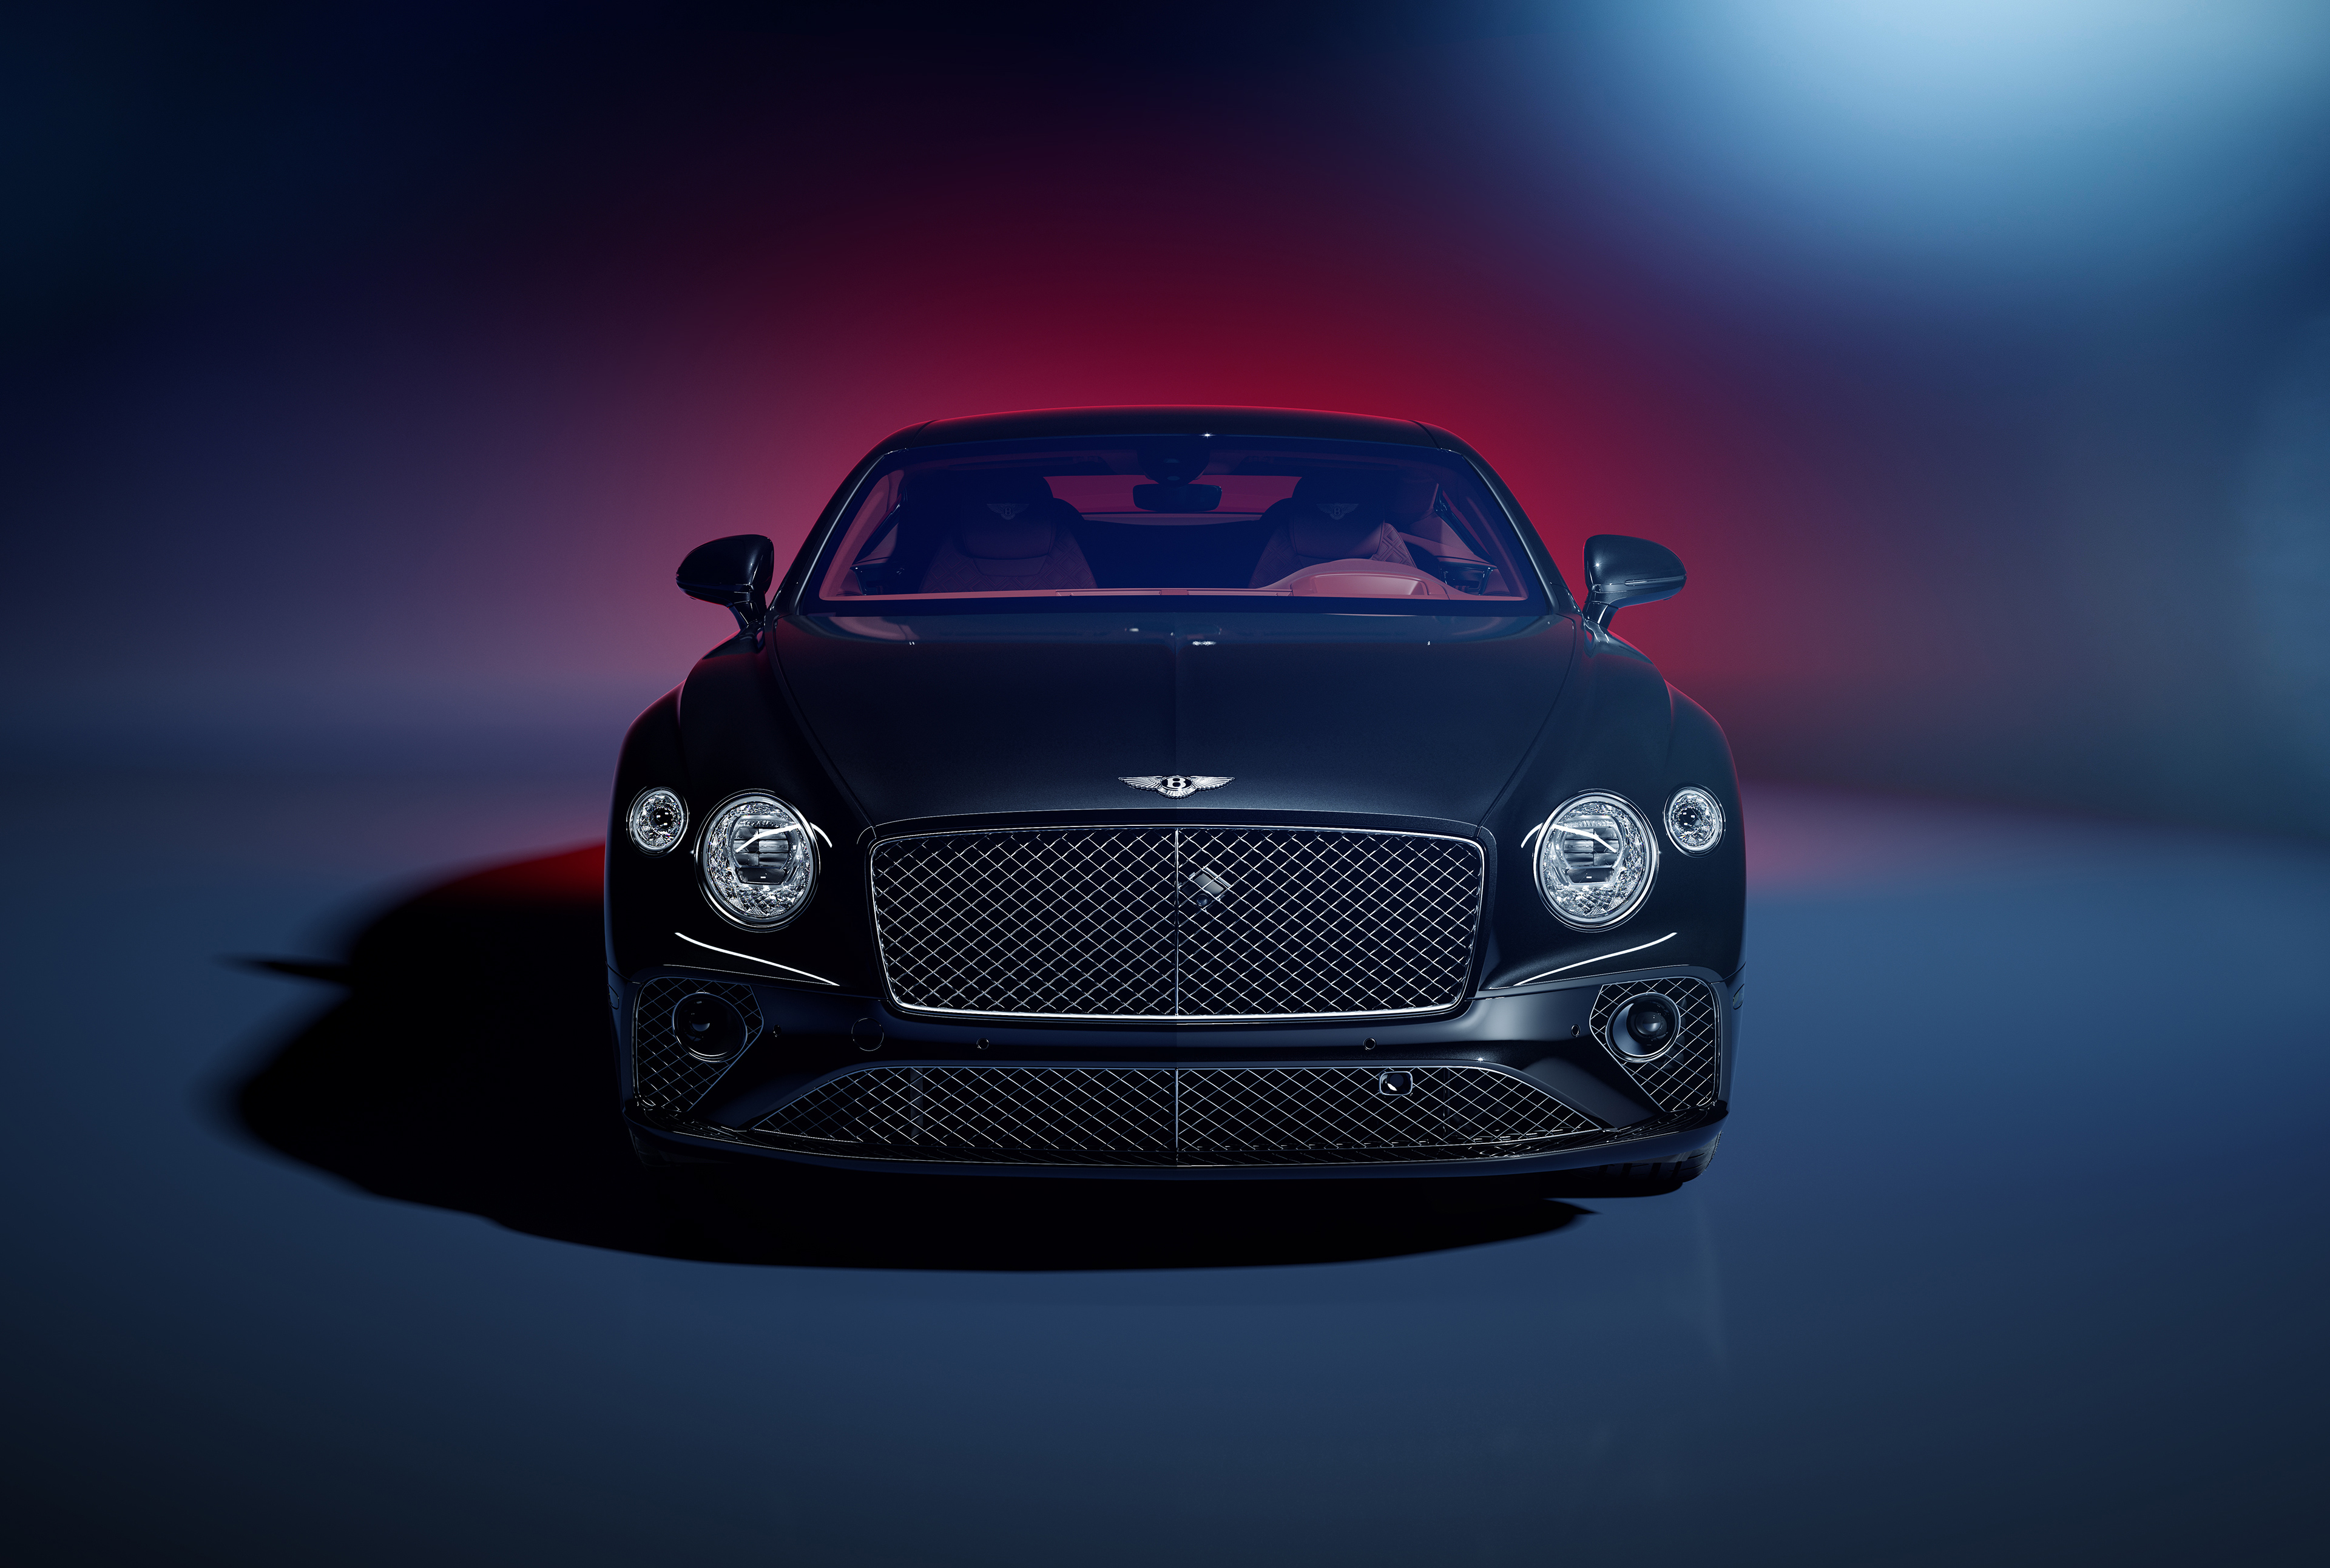 Baixe gratuitamente a imagem Bentley, Carro, Bentley Continental Gt, Veículos, Carro Preto, Bentley Continental na área de trabalho do seu PC